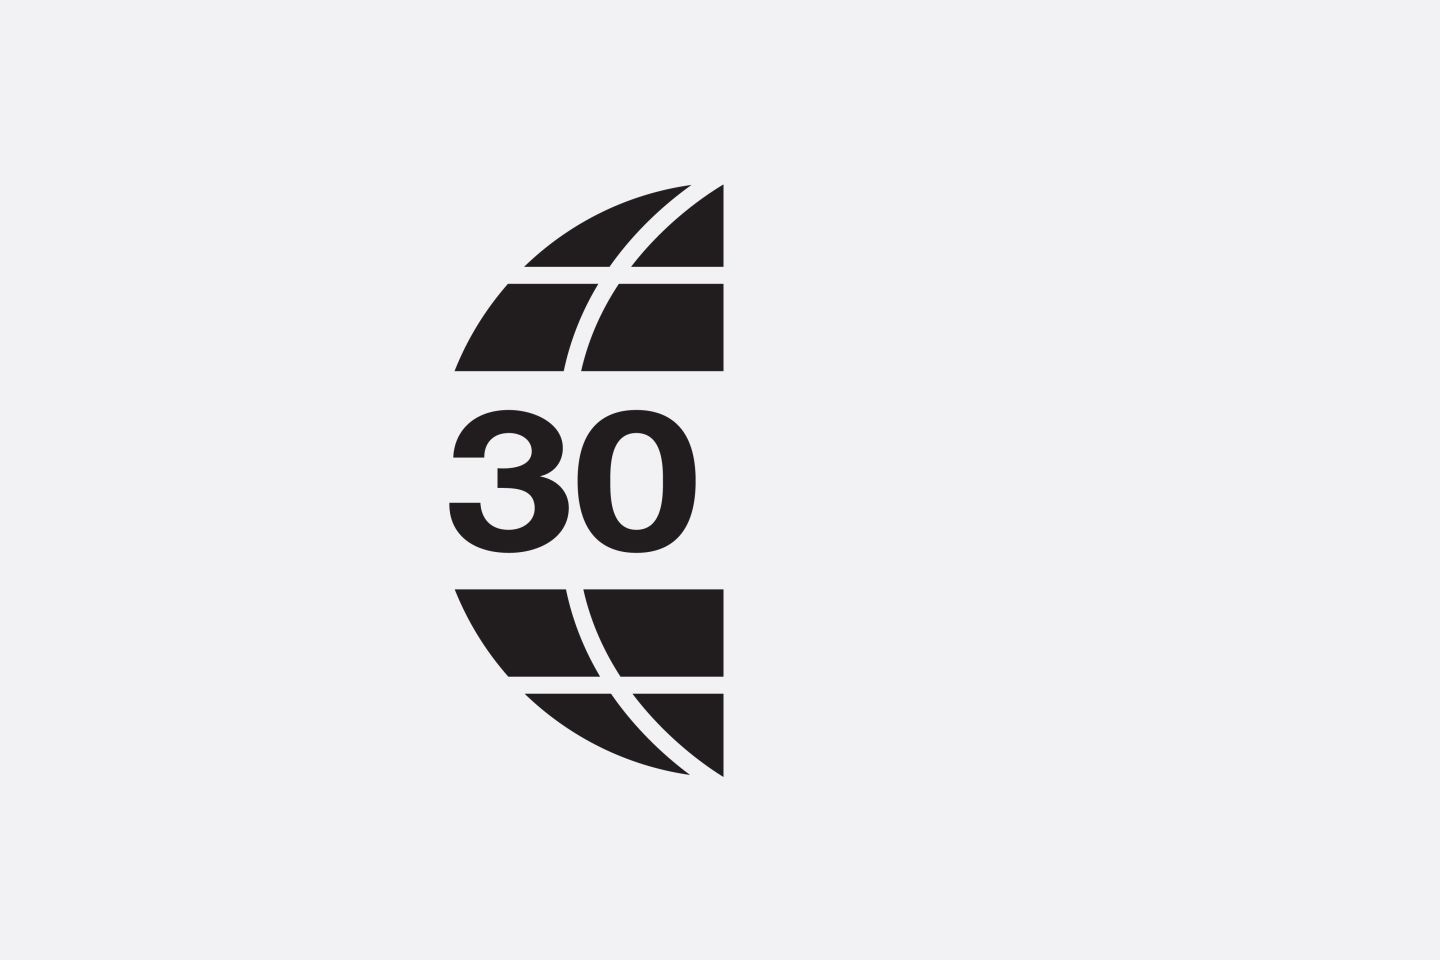 30 years of networking – Swift